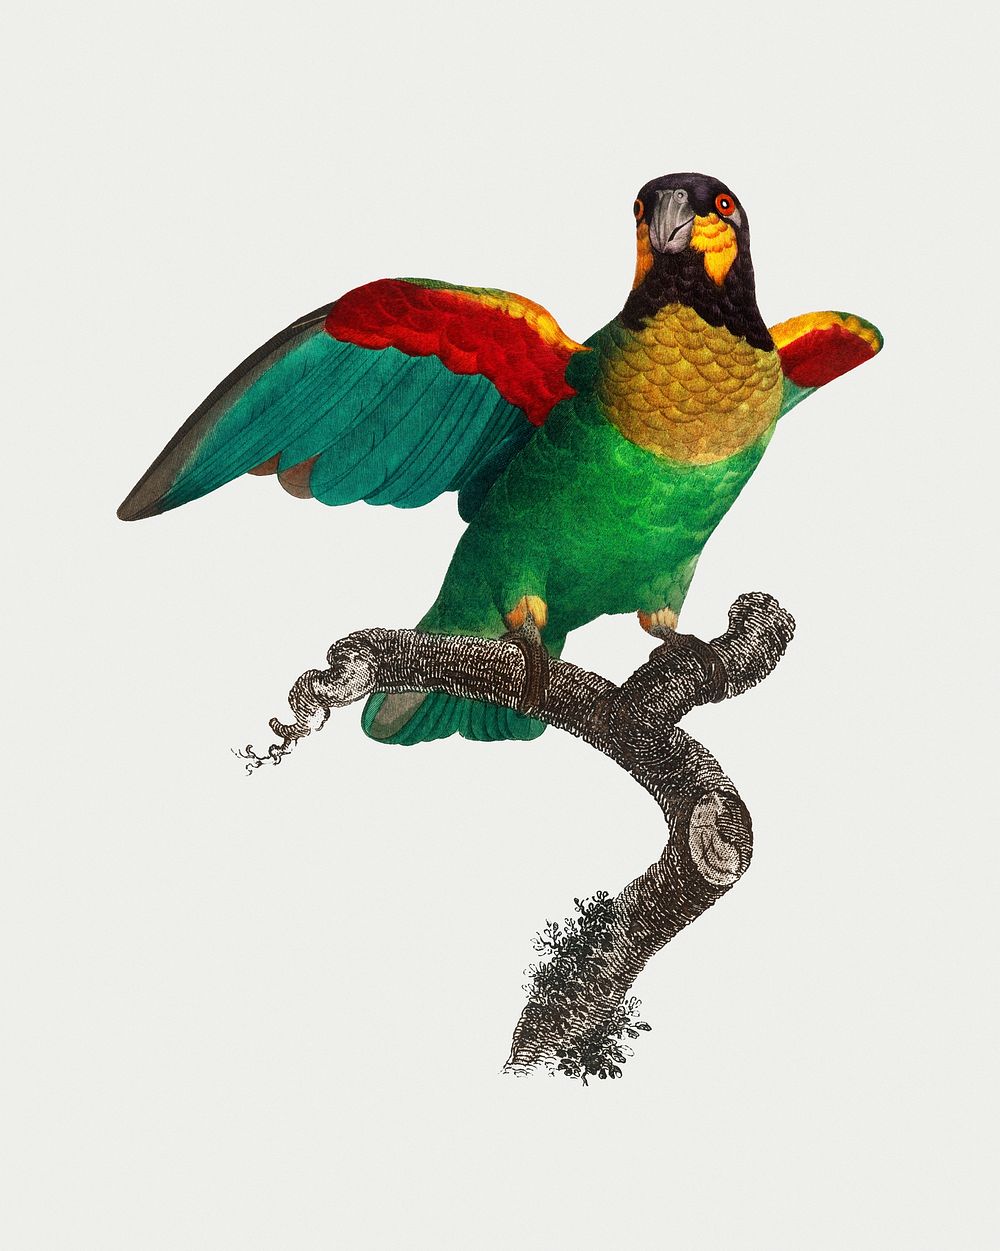 The Orange-cheeked parrot vintage illustration